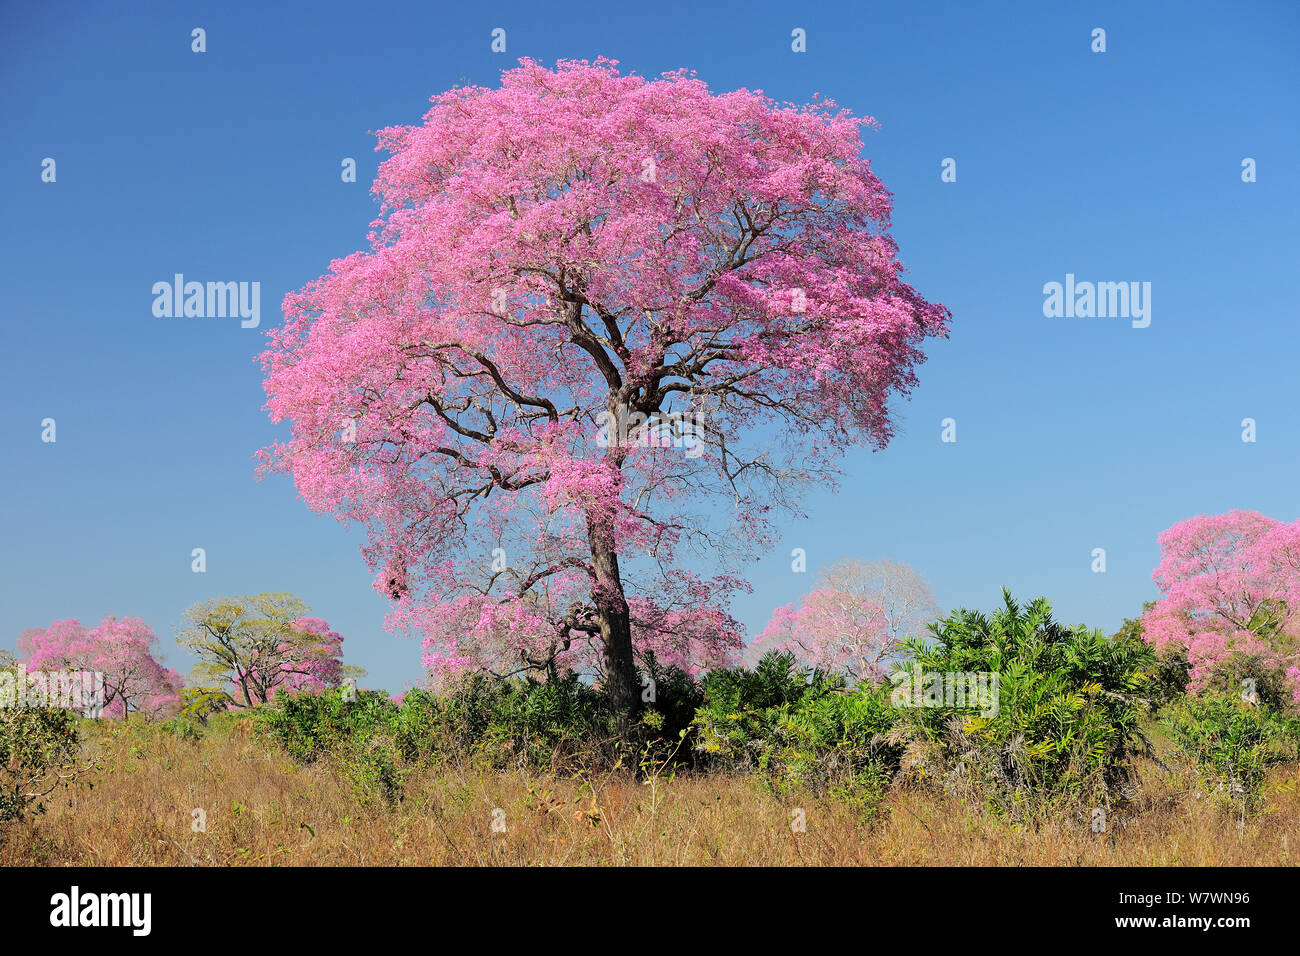 Pink Ipe tree (Tabebuia ipe / Handroanthus impetiginosus) in flower, Pantanal, Mato Grosso State, Western Brazil. Stock Photo